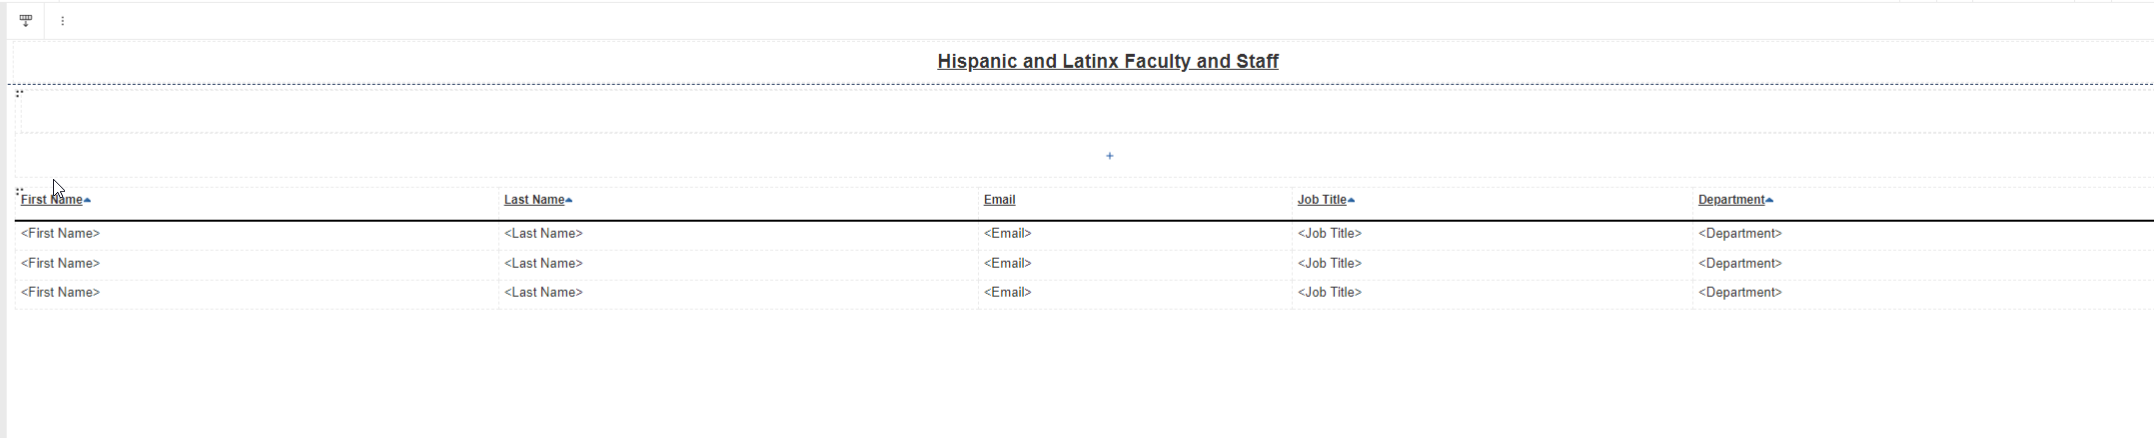 Hispanic & Latinx Faculty & Staff